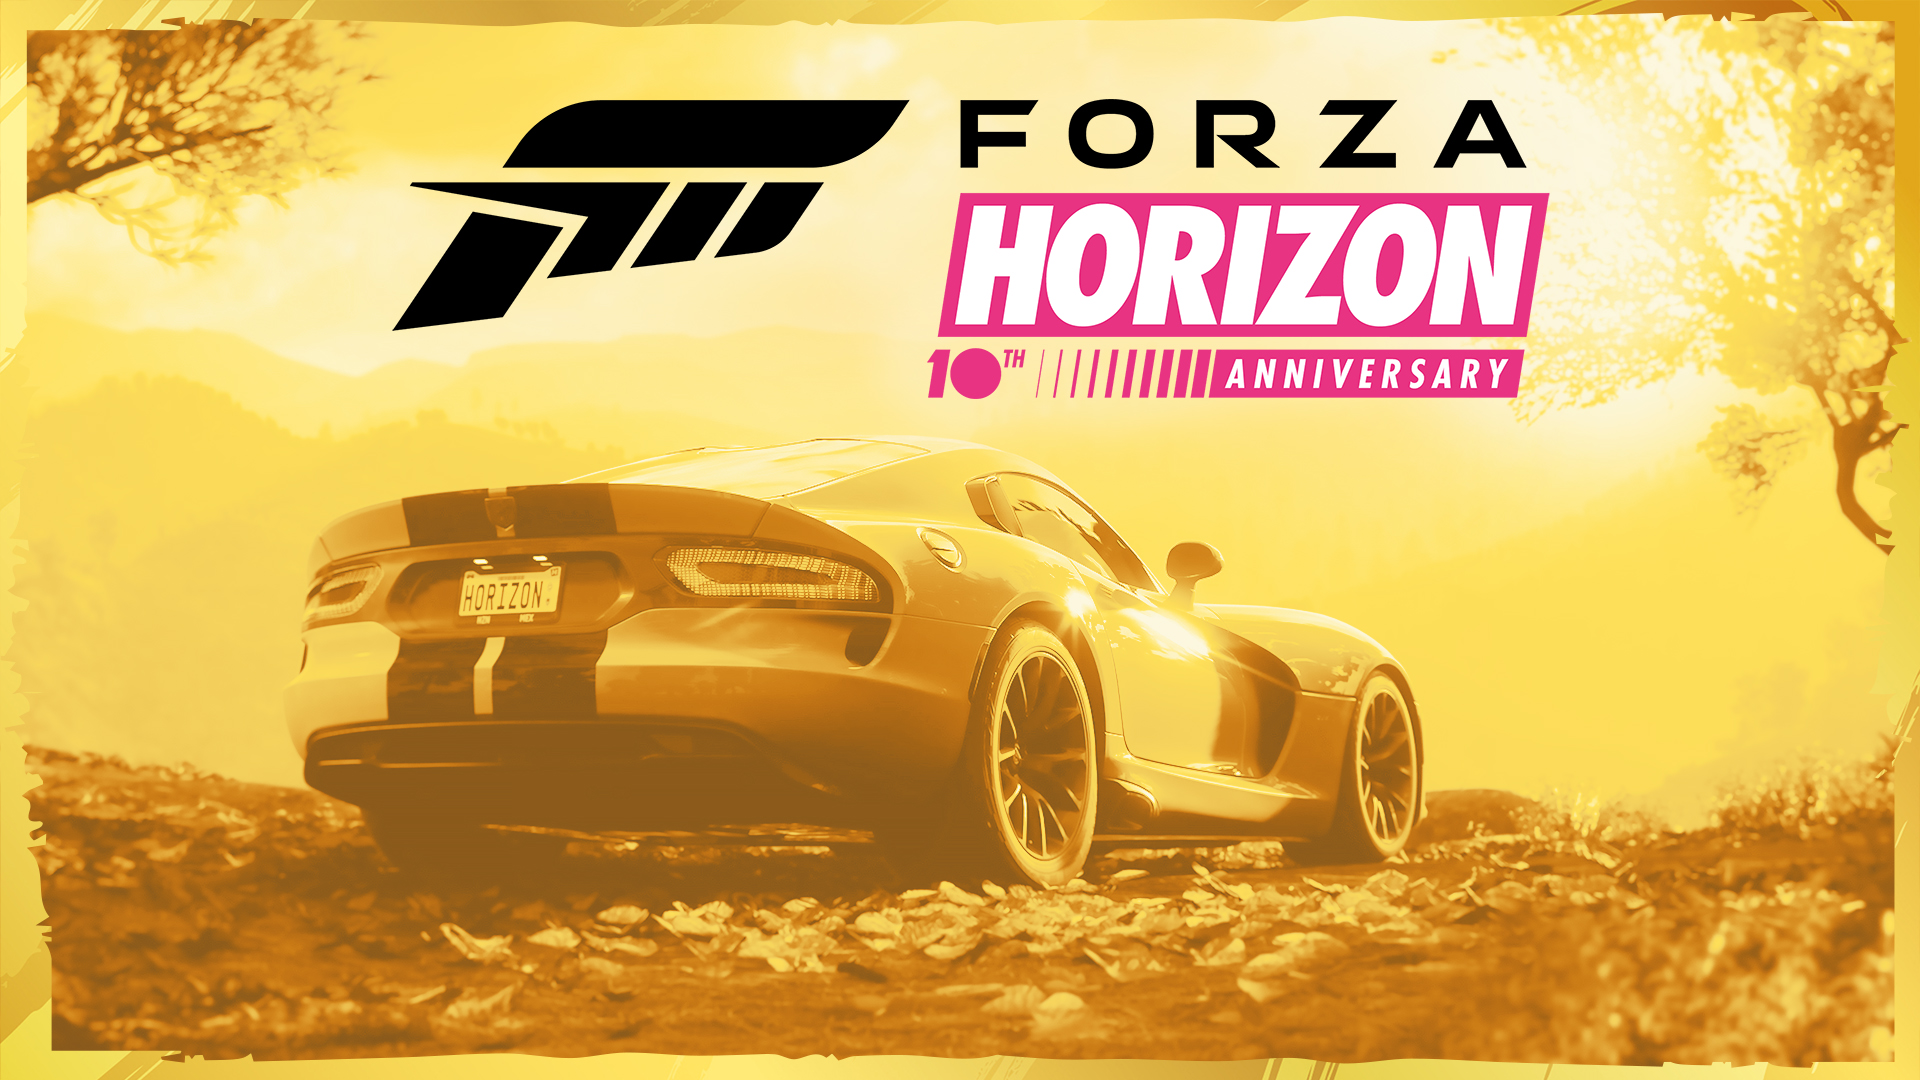 Microsoft vs Steam  Forza Horizon 5 - Performance Comparison 